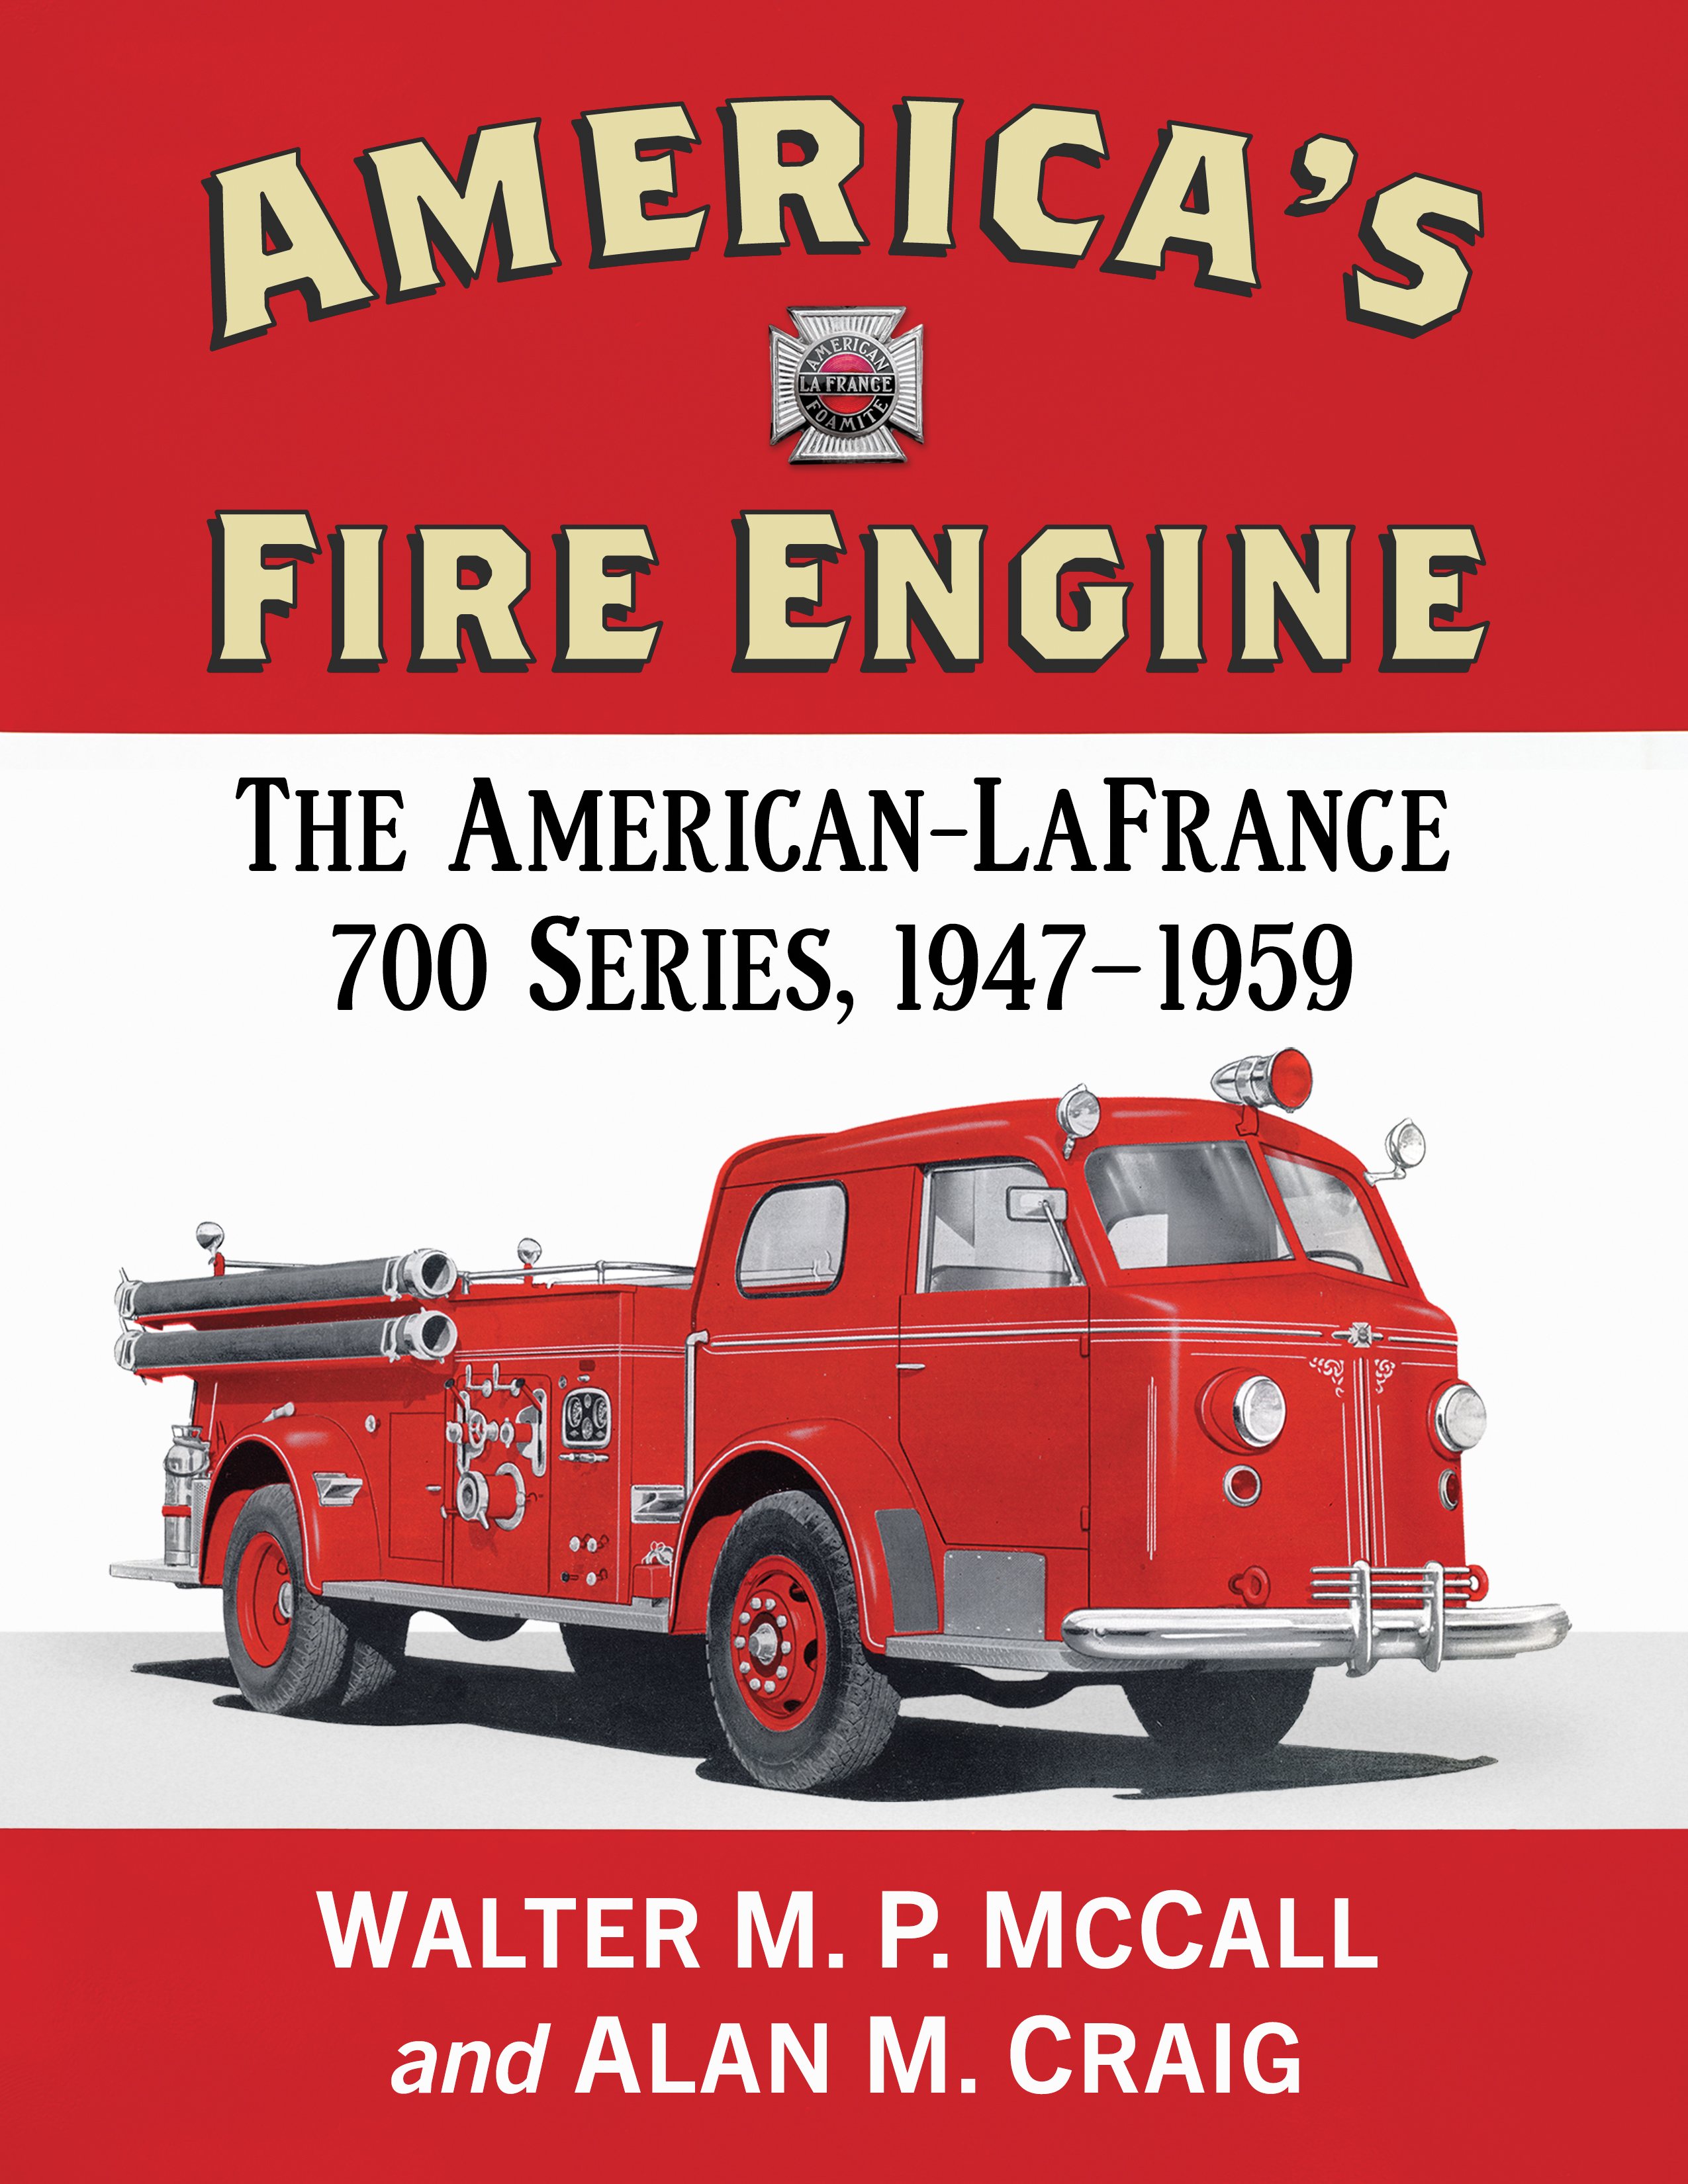 America's Fire Engine